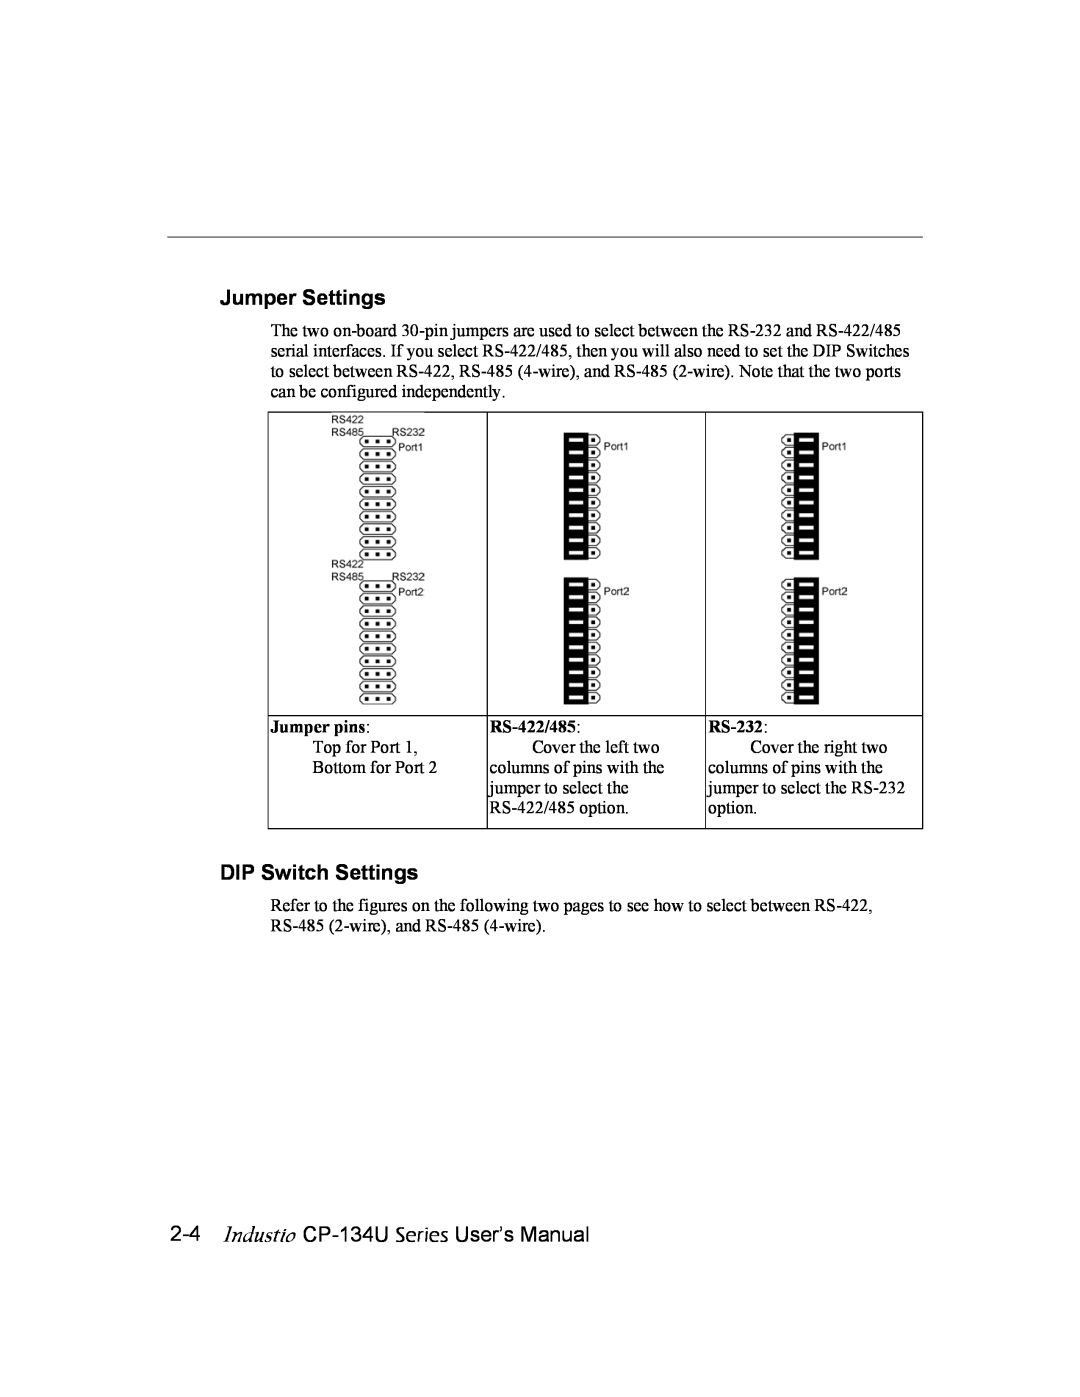 Moxa Technologies user manual Jumper Settings, DIP Switch Settings, Industio CP-134U Series User’s Manual 